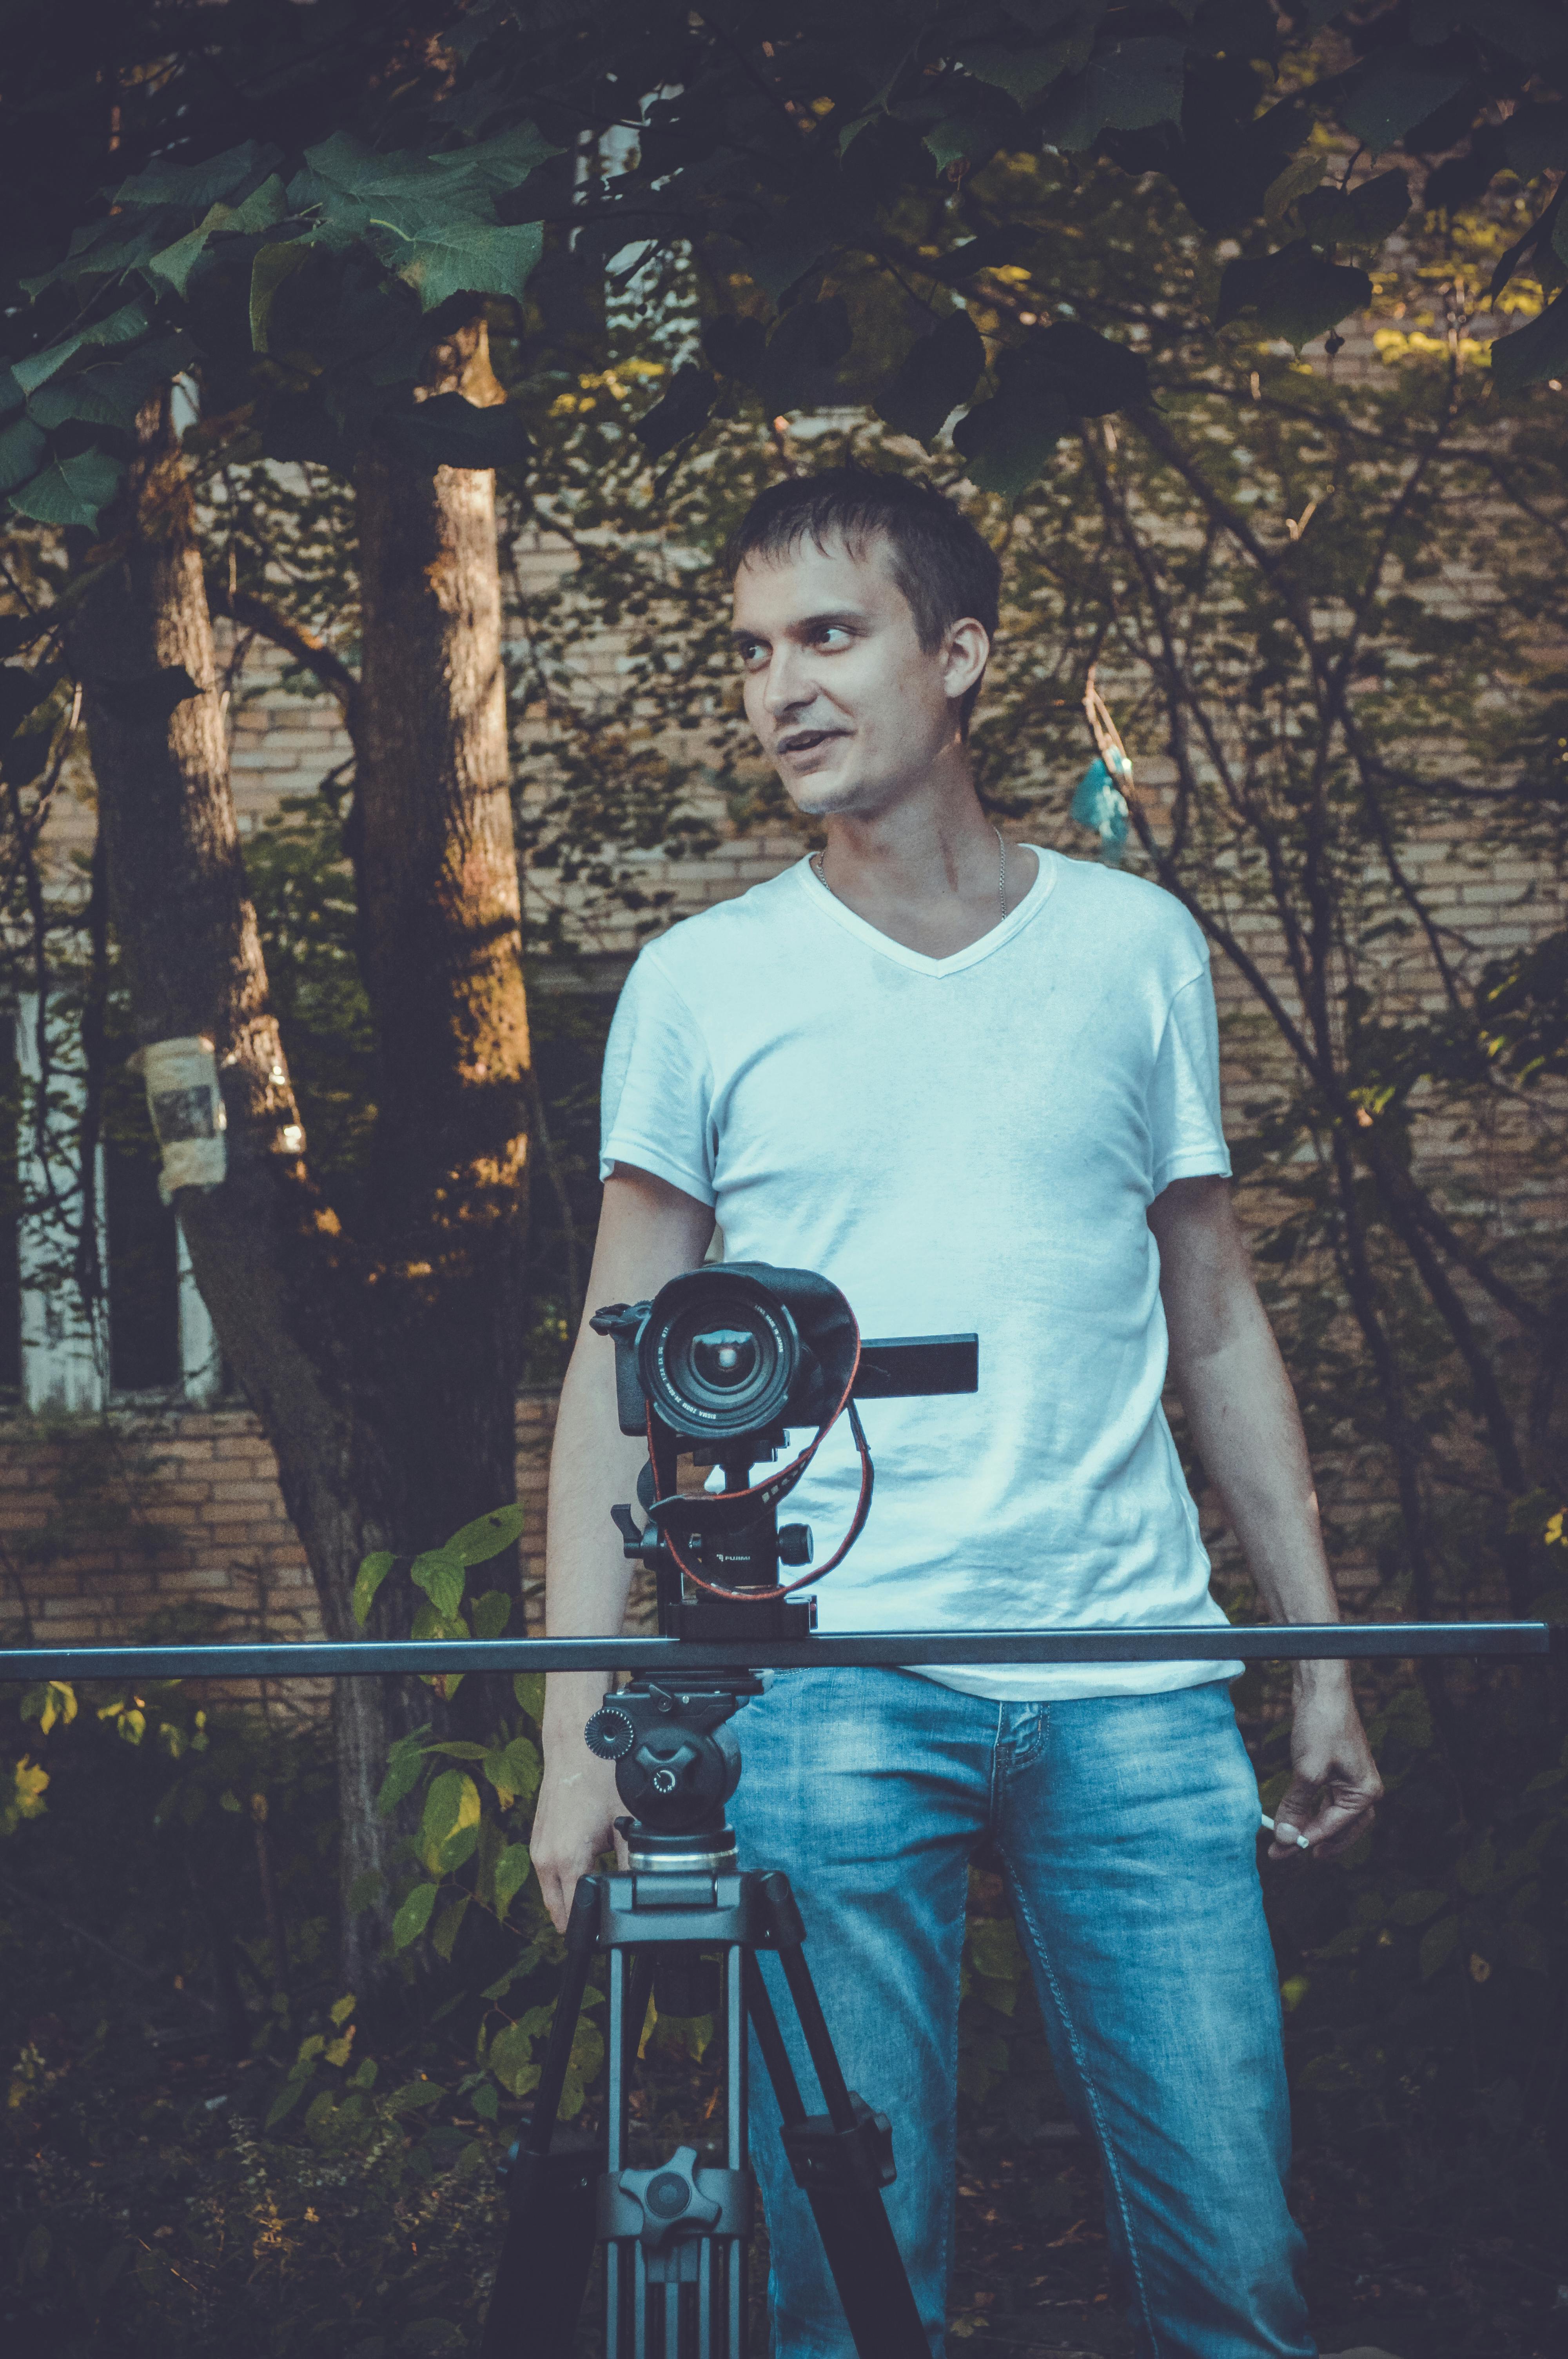 videographer using professional camera in garden